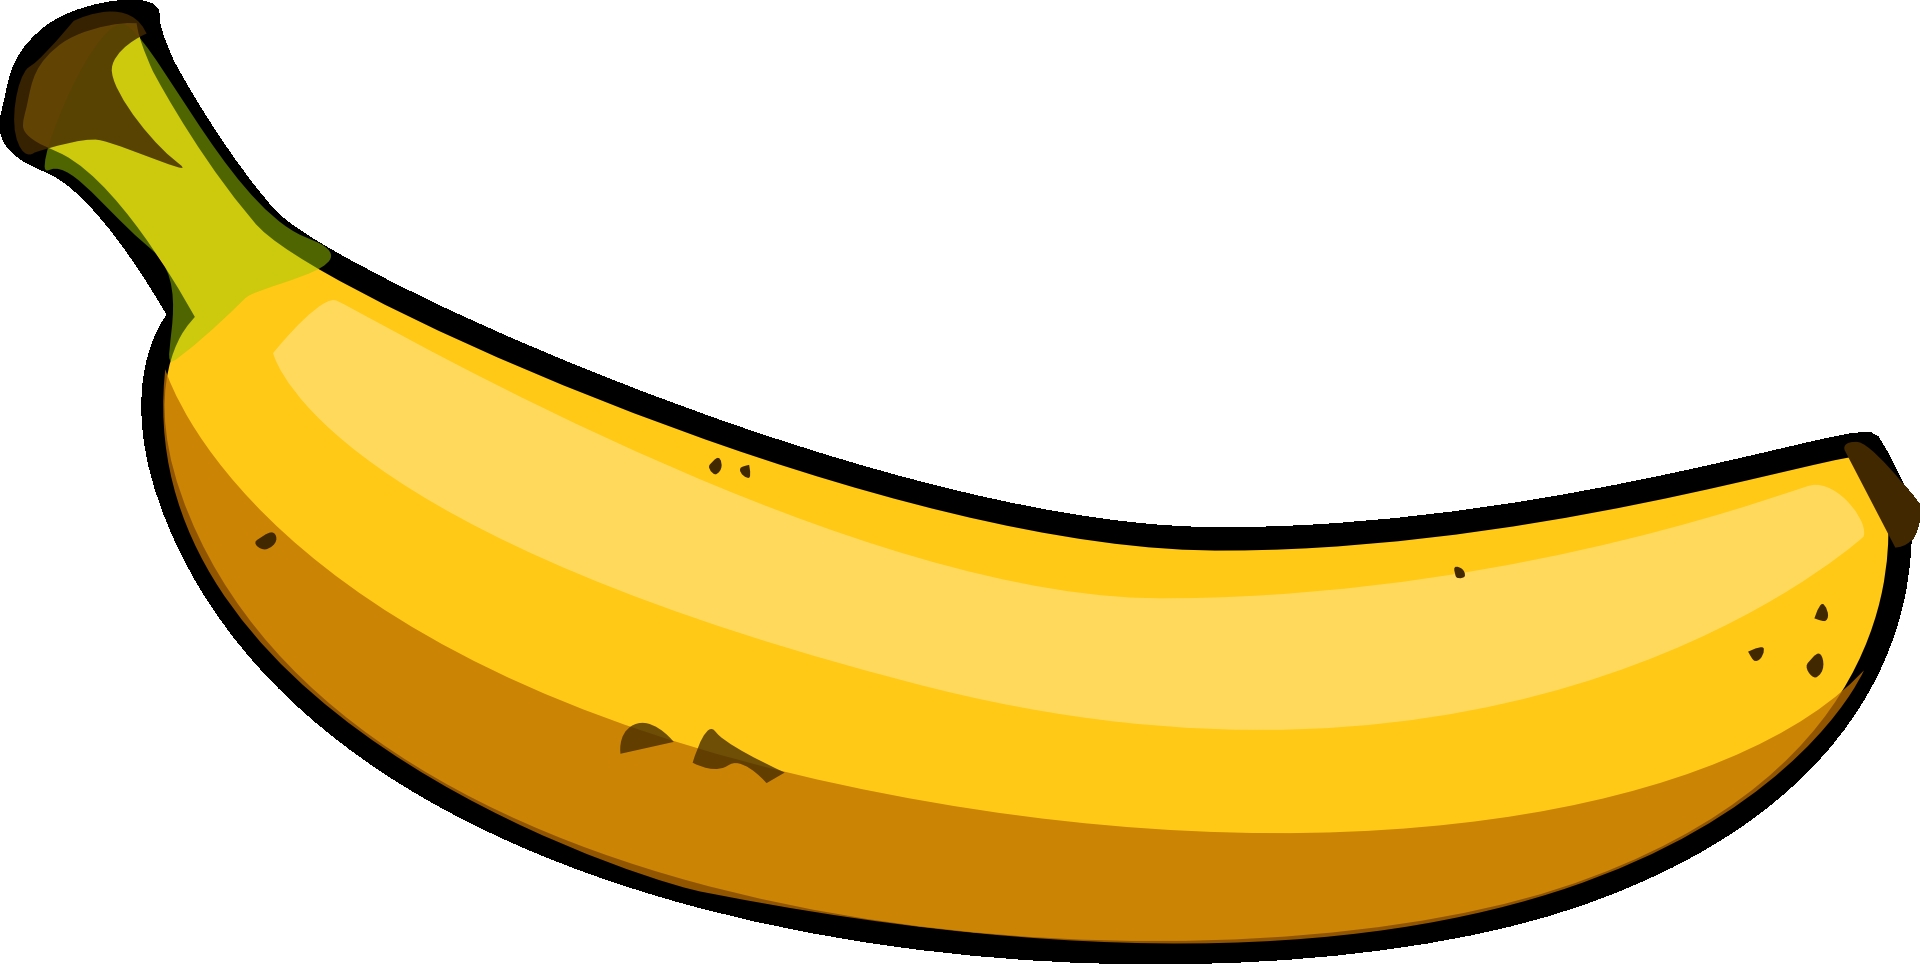 Bananas Clipart Banana Clip Art Free Vector Image Banana Clipart ...